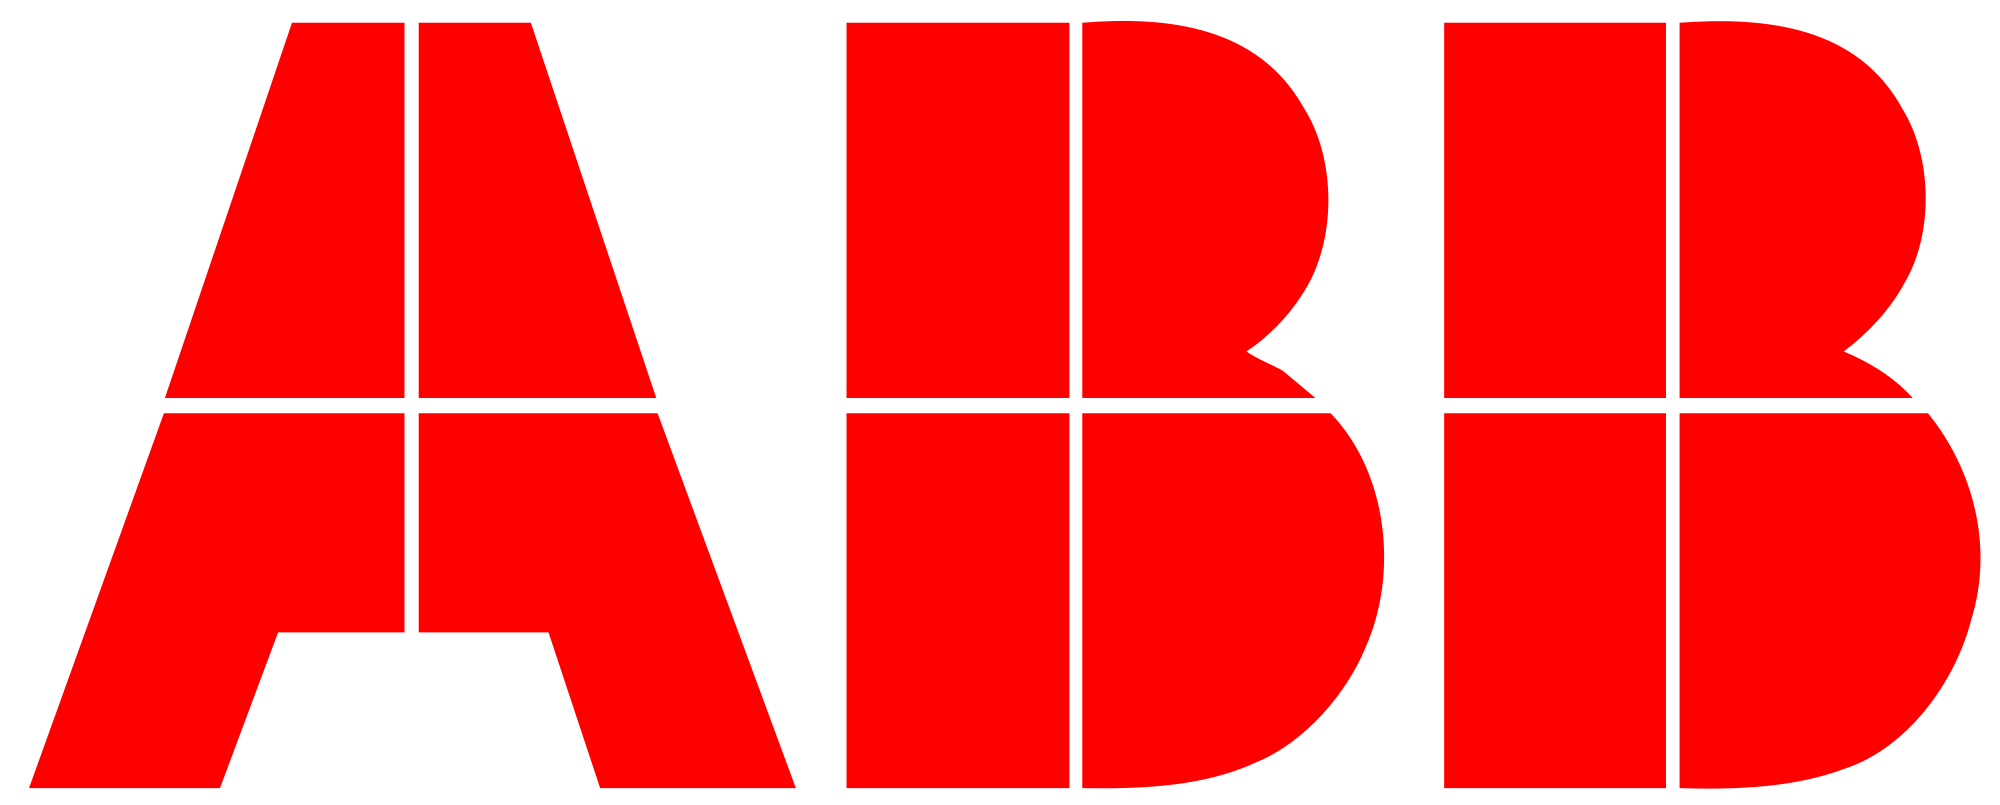 ABB Logo Wallpaper